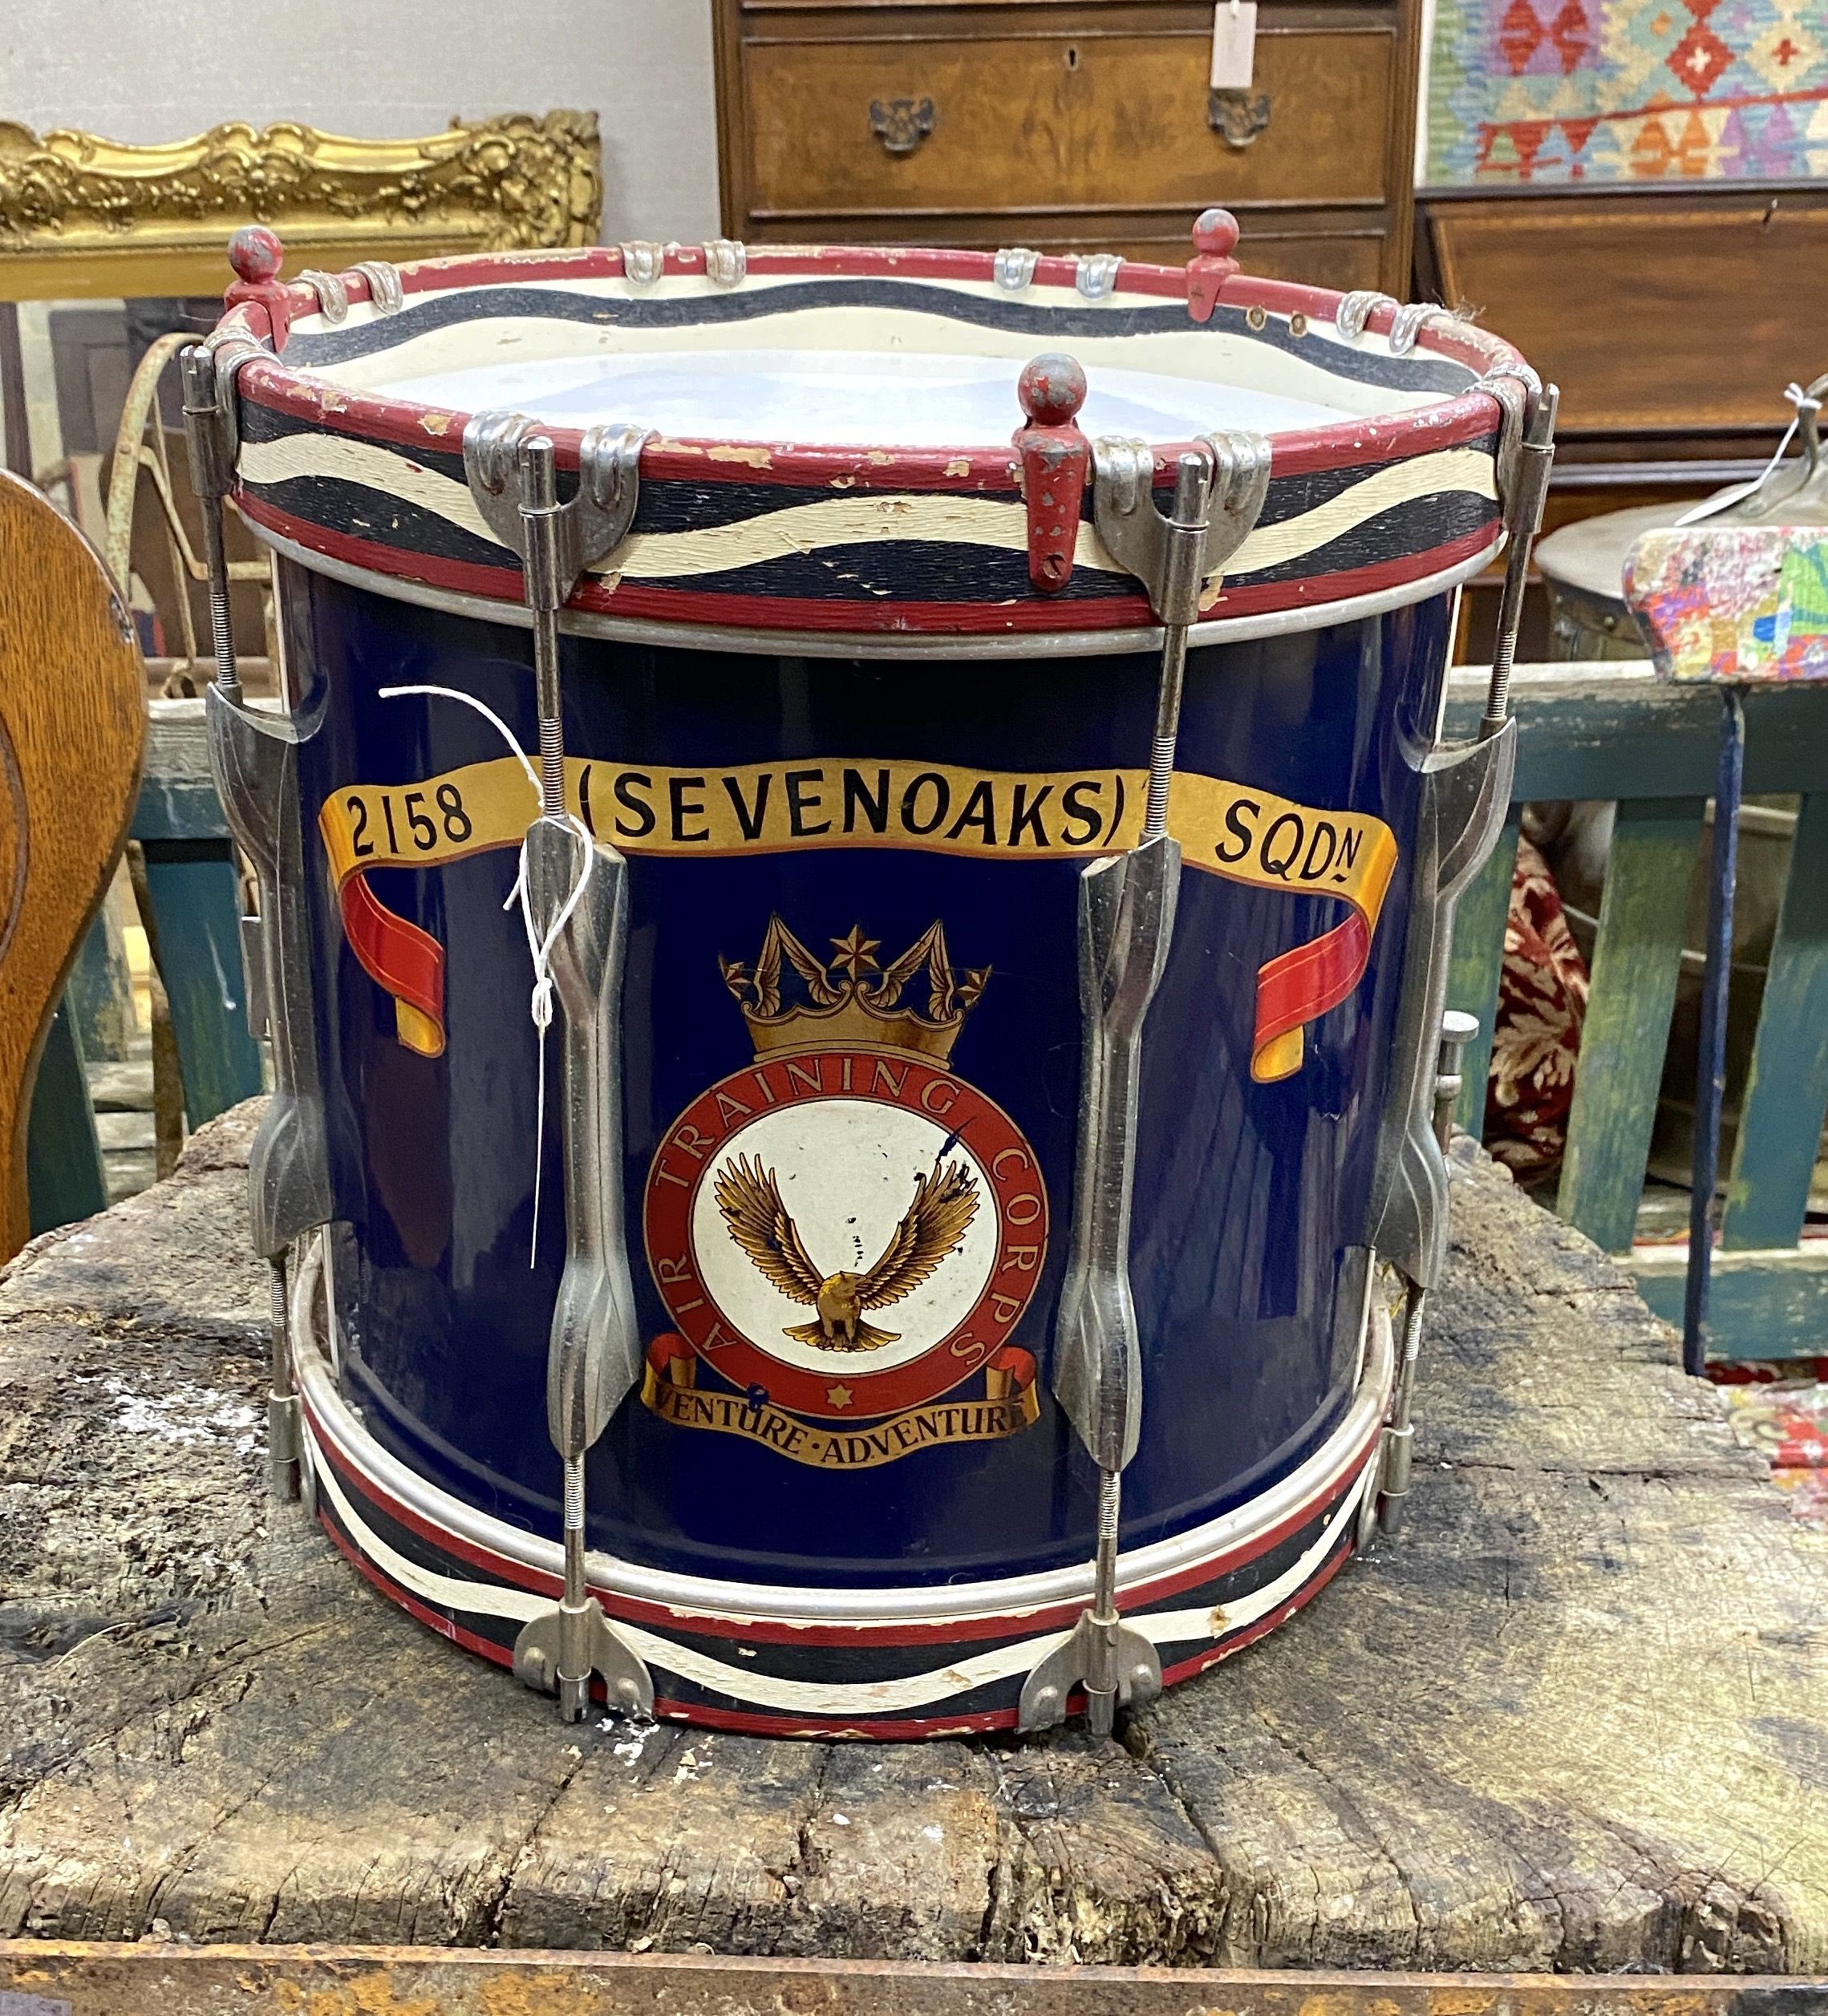 A 2158 Sevenoaks squadron marching drum, diameter 38cm, height 37cm